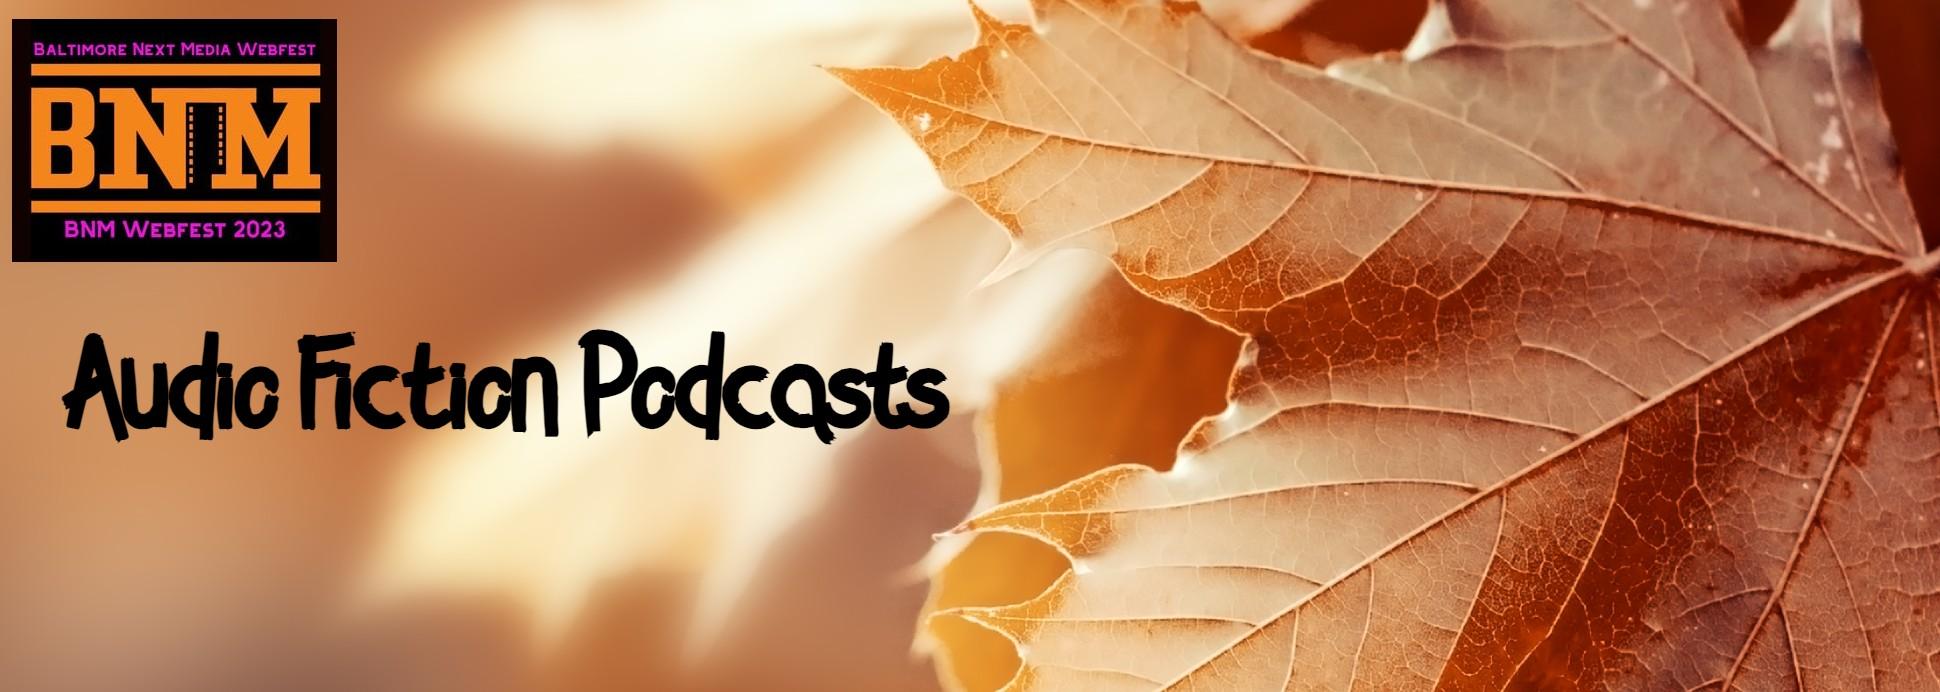 Audio Fiction Podcasts 1